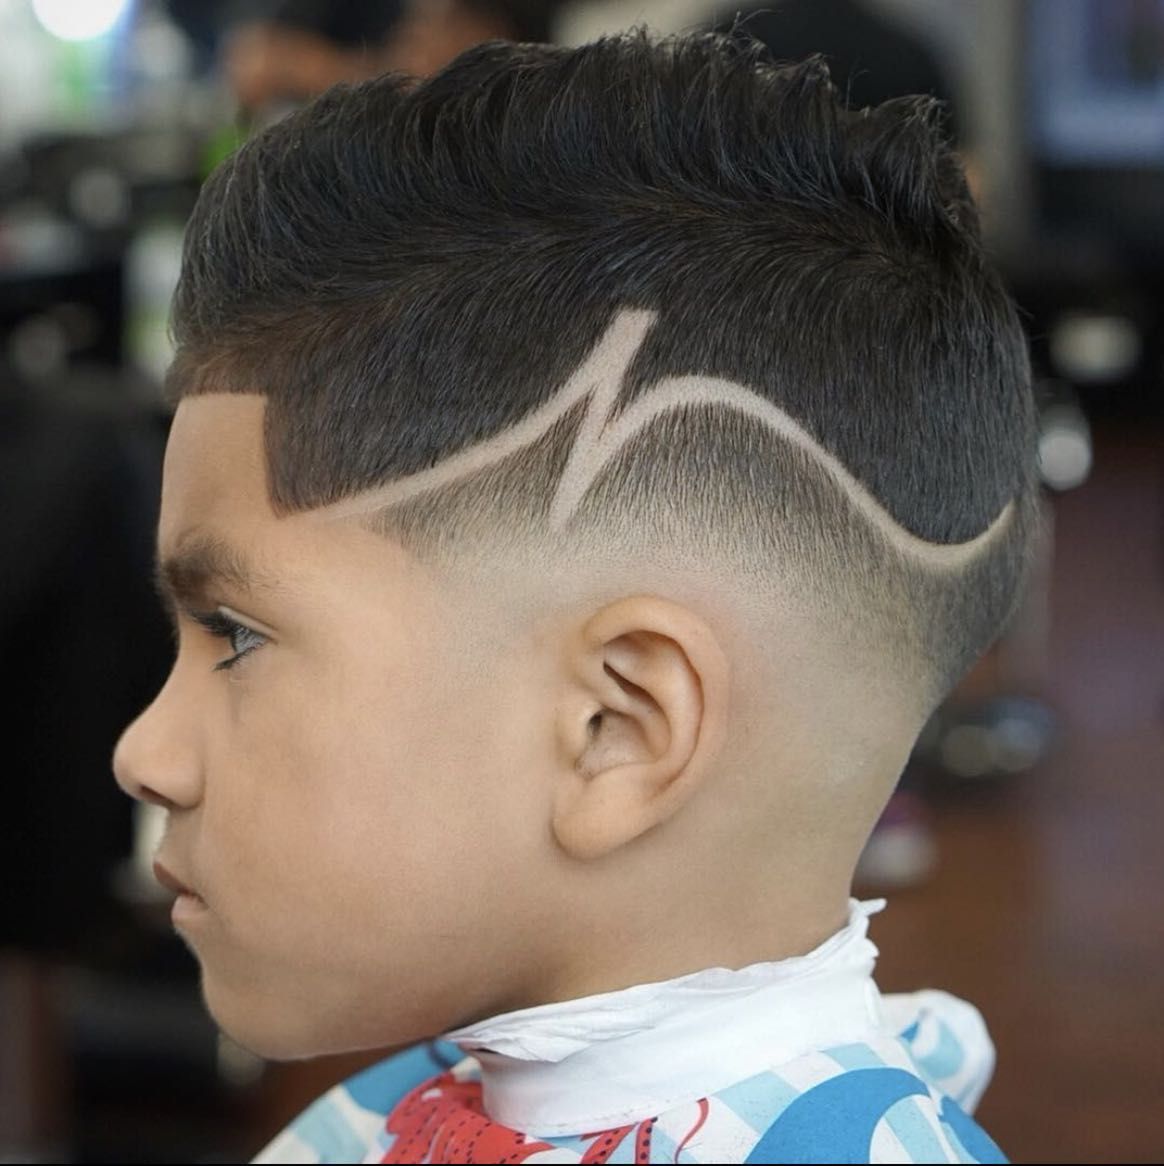 Kids haircut with design ✔️ portfolio